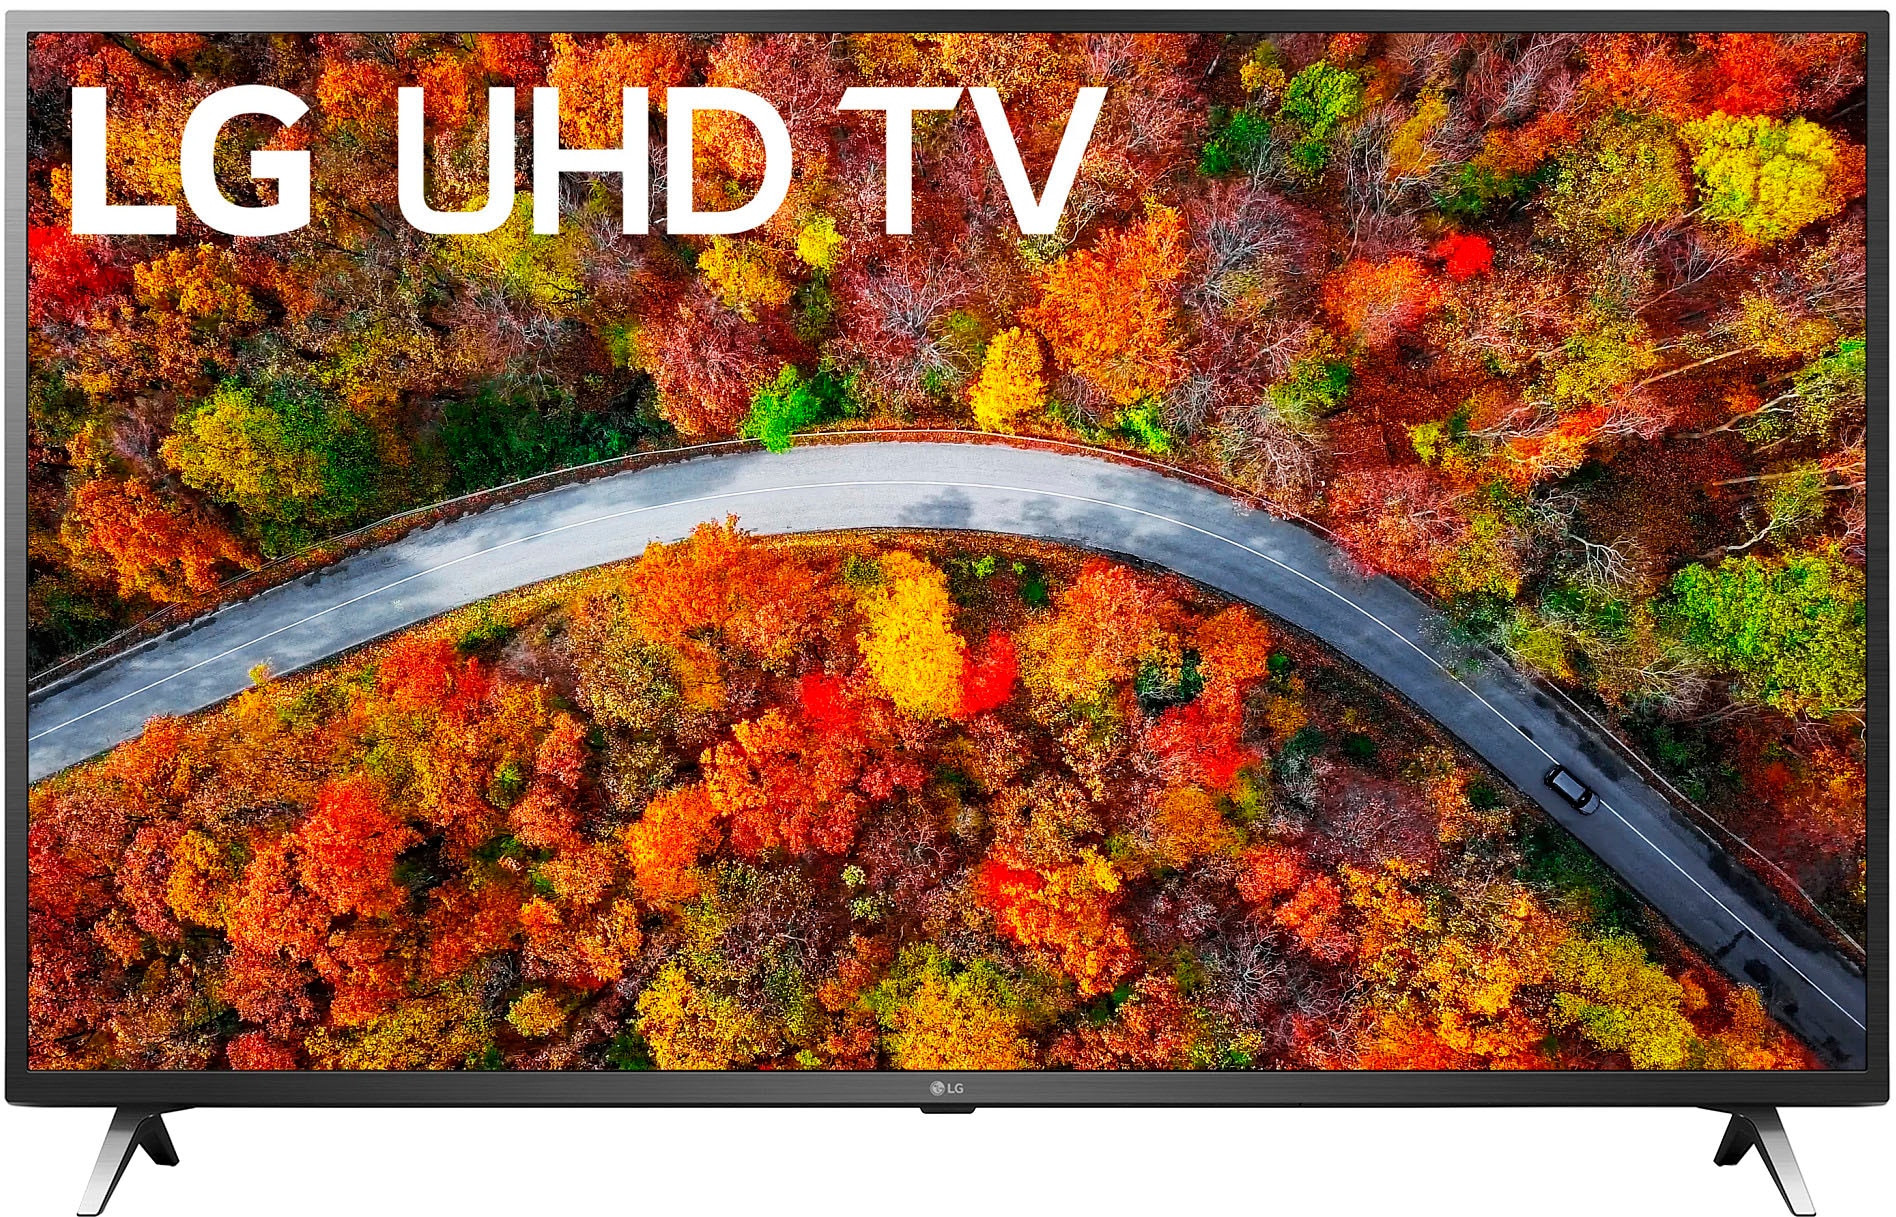 65" LG 65UN9000AUJ LED 4K UHD Smart webOS HDTV $499.99 + Free Delivery